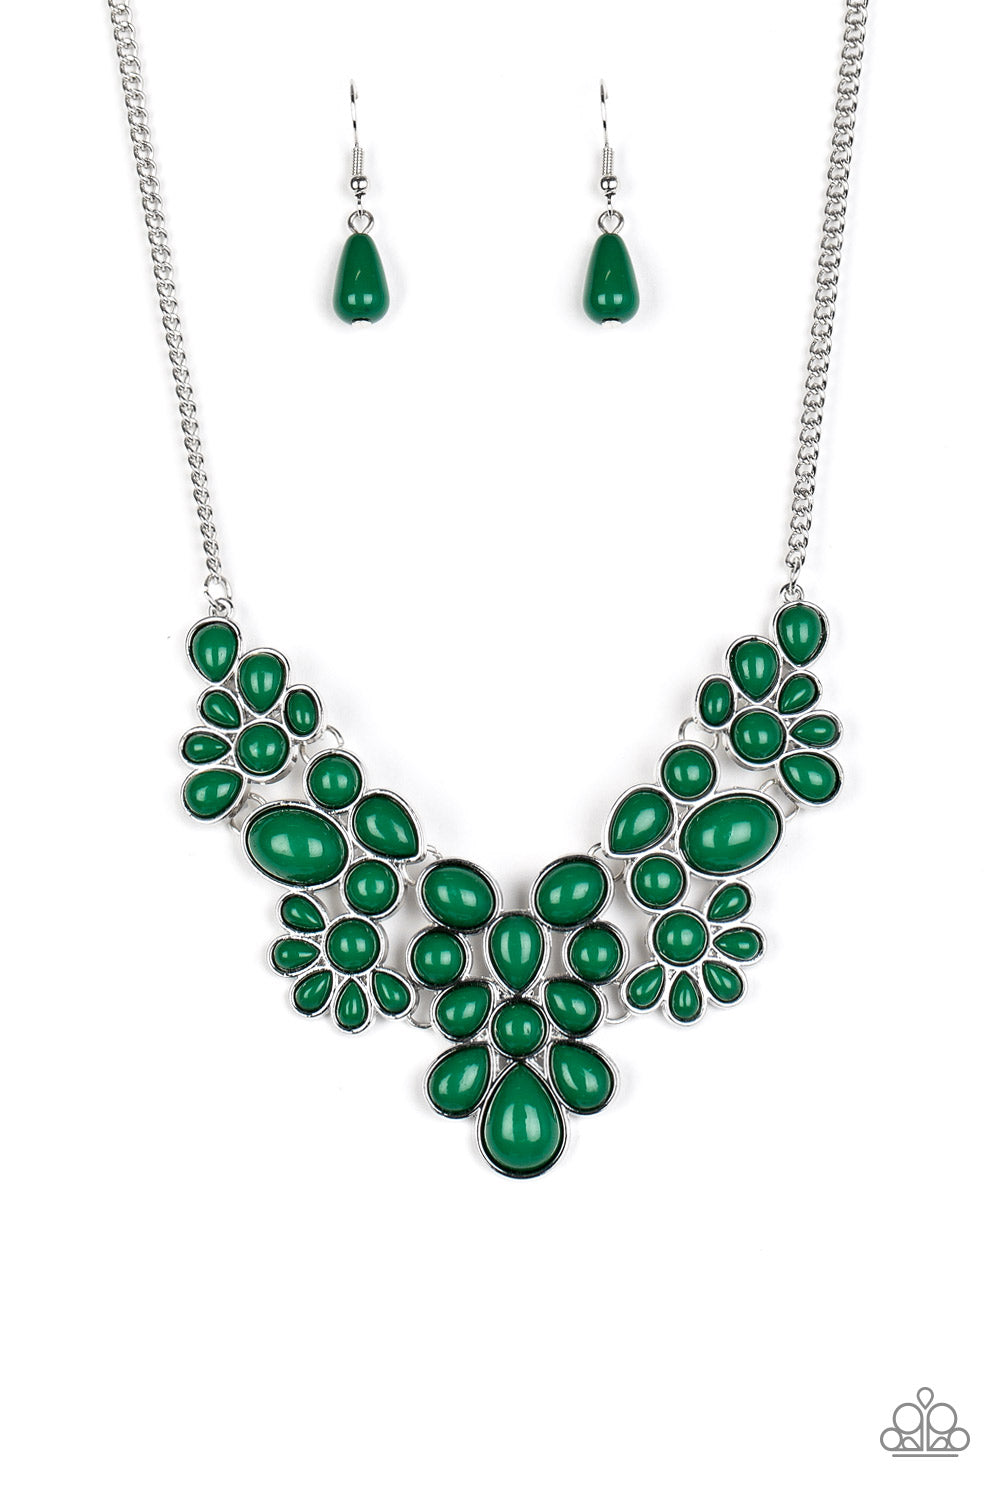 green-necklace-18-284-1019-p2st-grxx-063xx